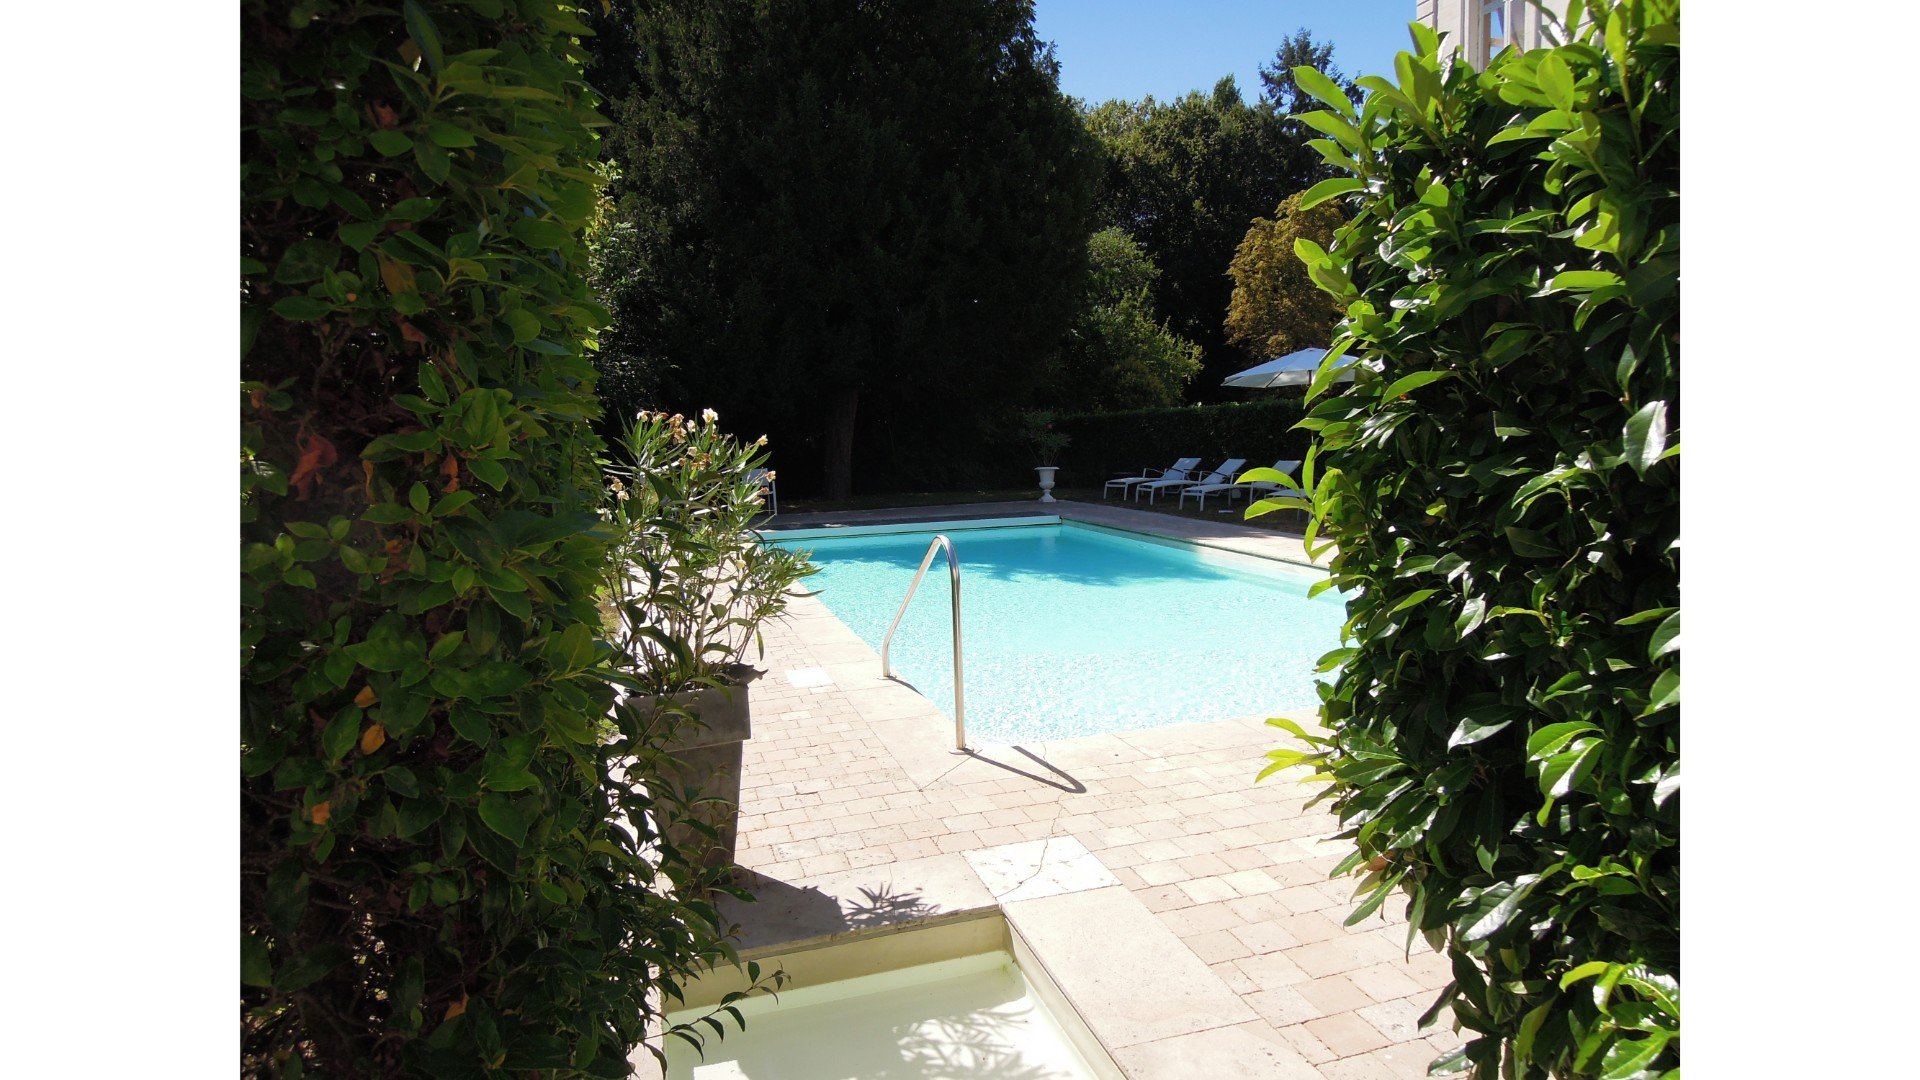 127/piscine  spa/Piscine_Chateau_de_Verrieres_.jpg